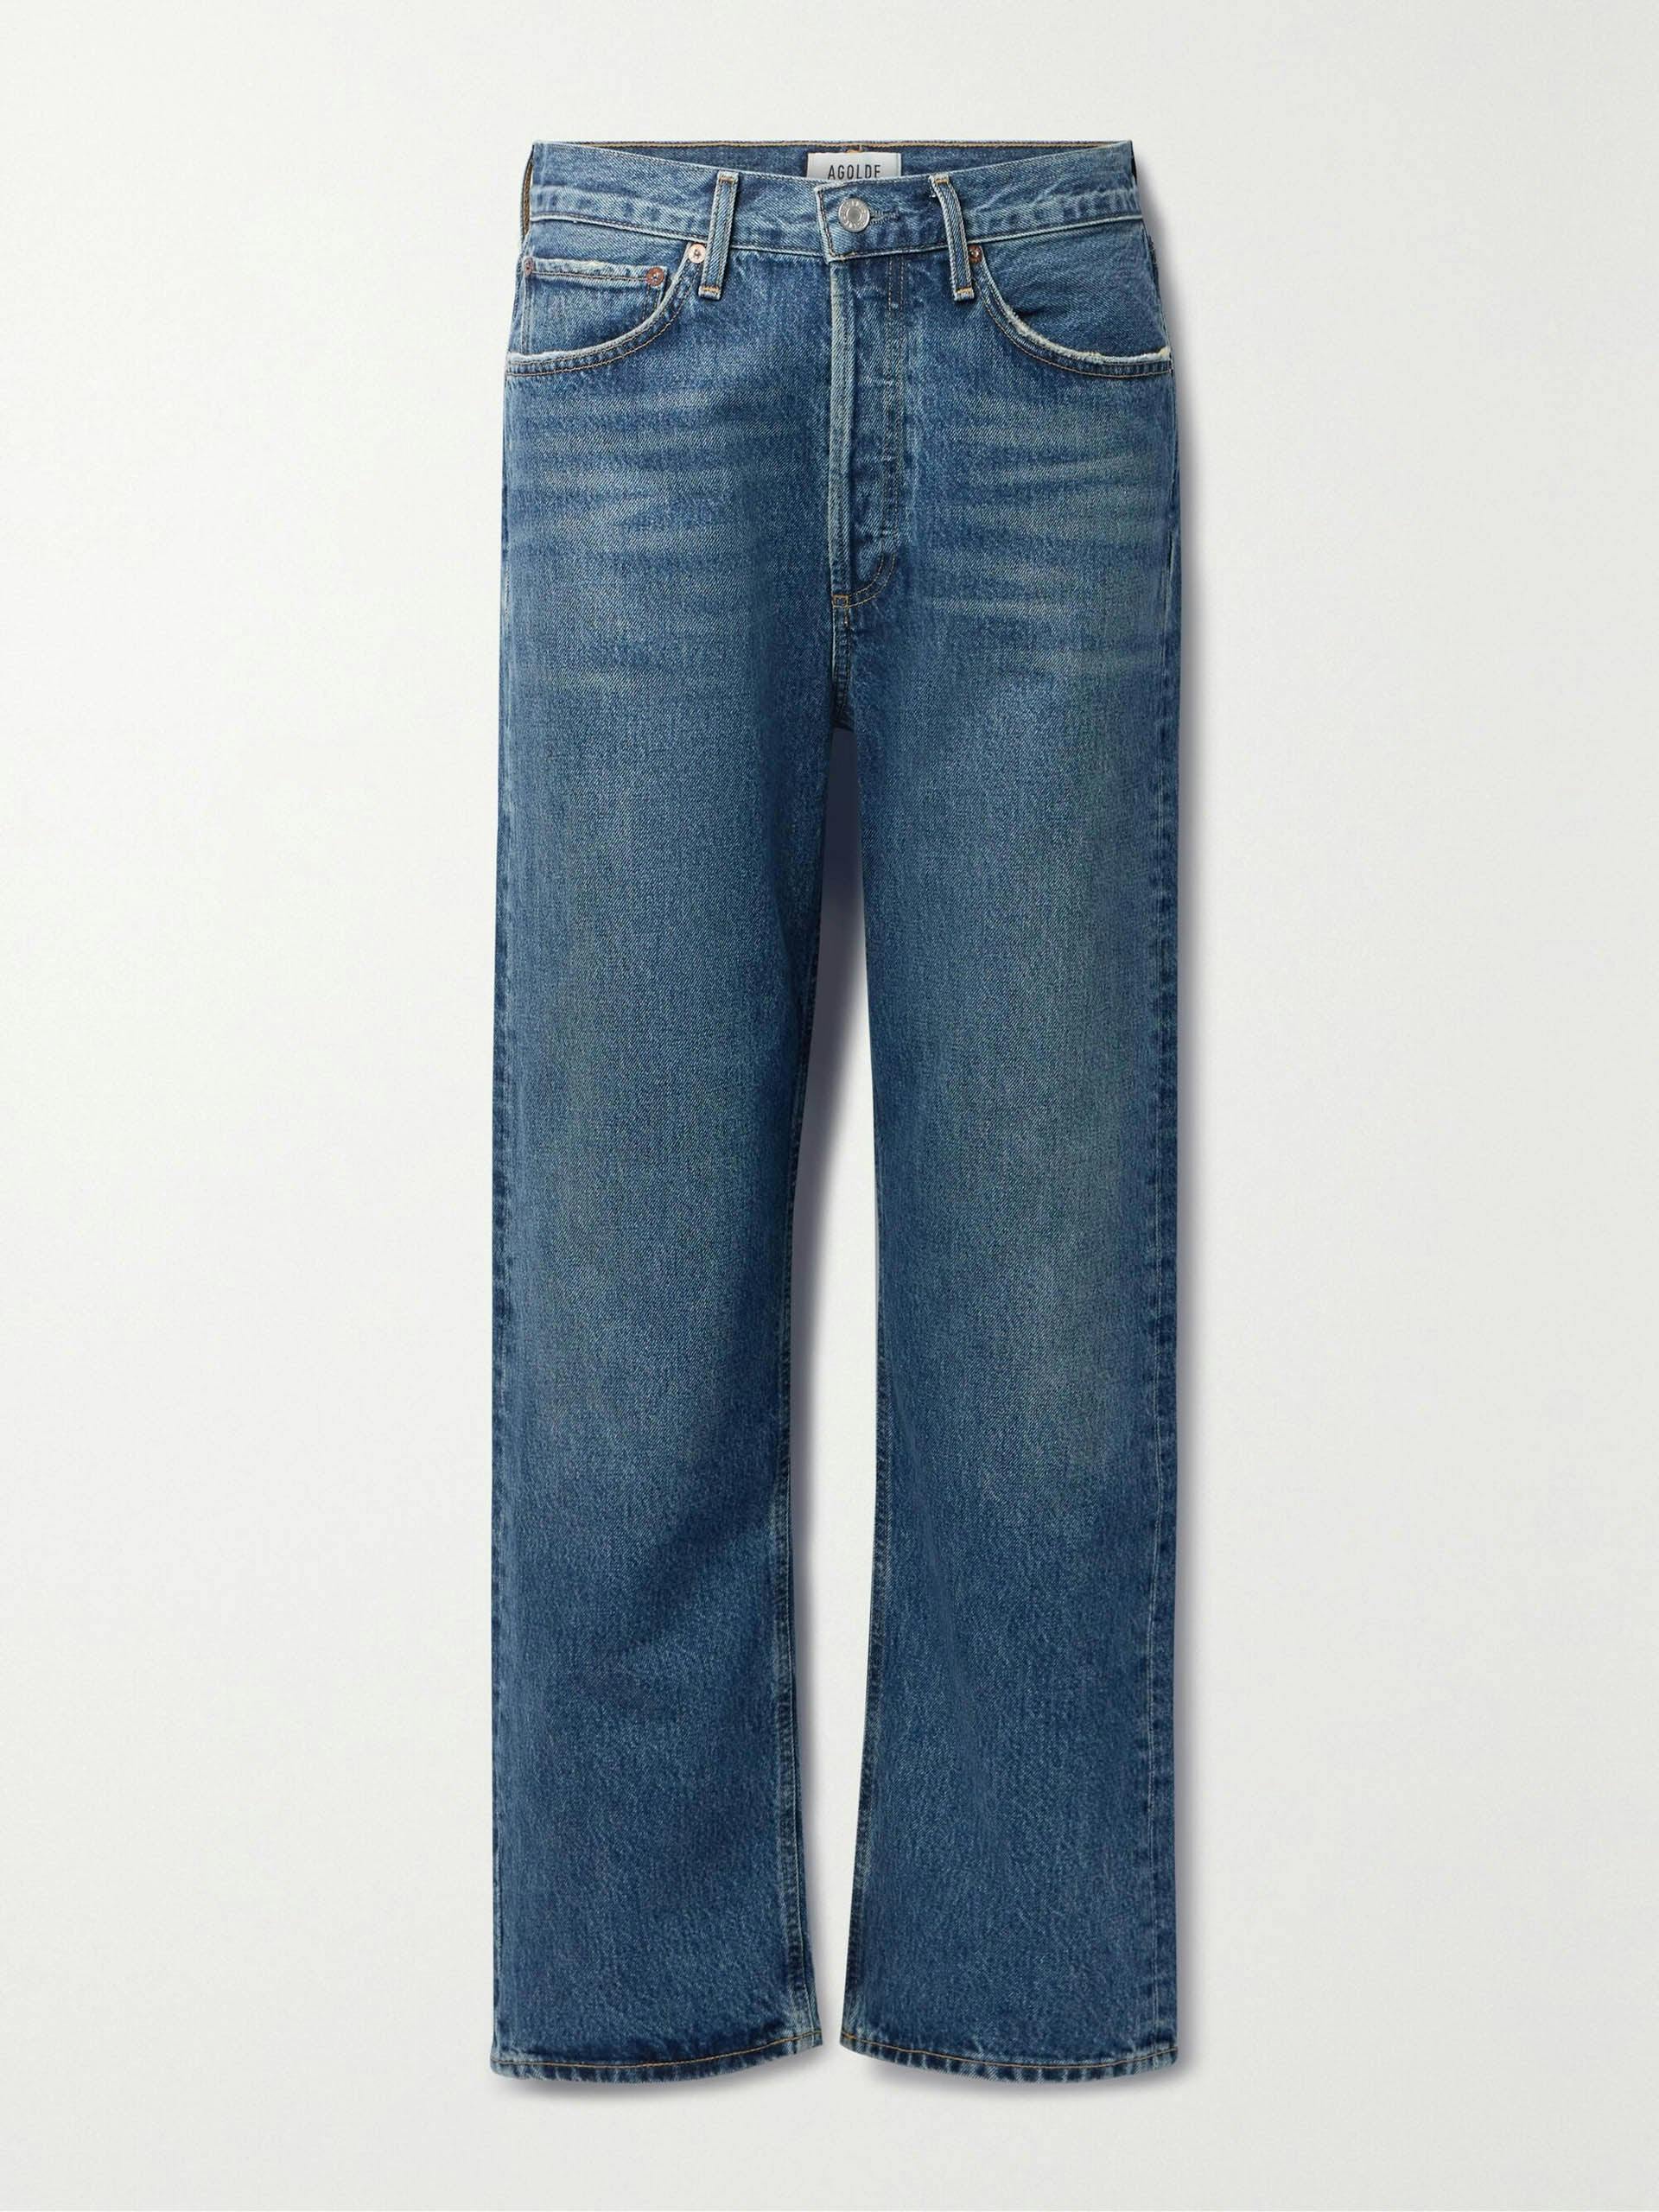 '90s mid-rise straight-leg organic jeans